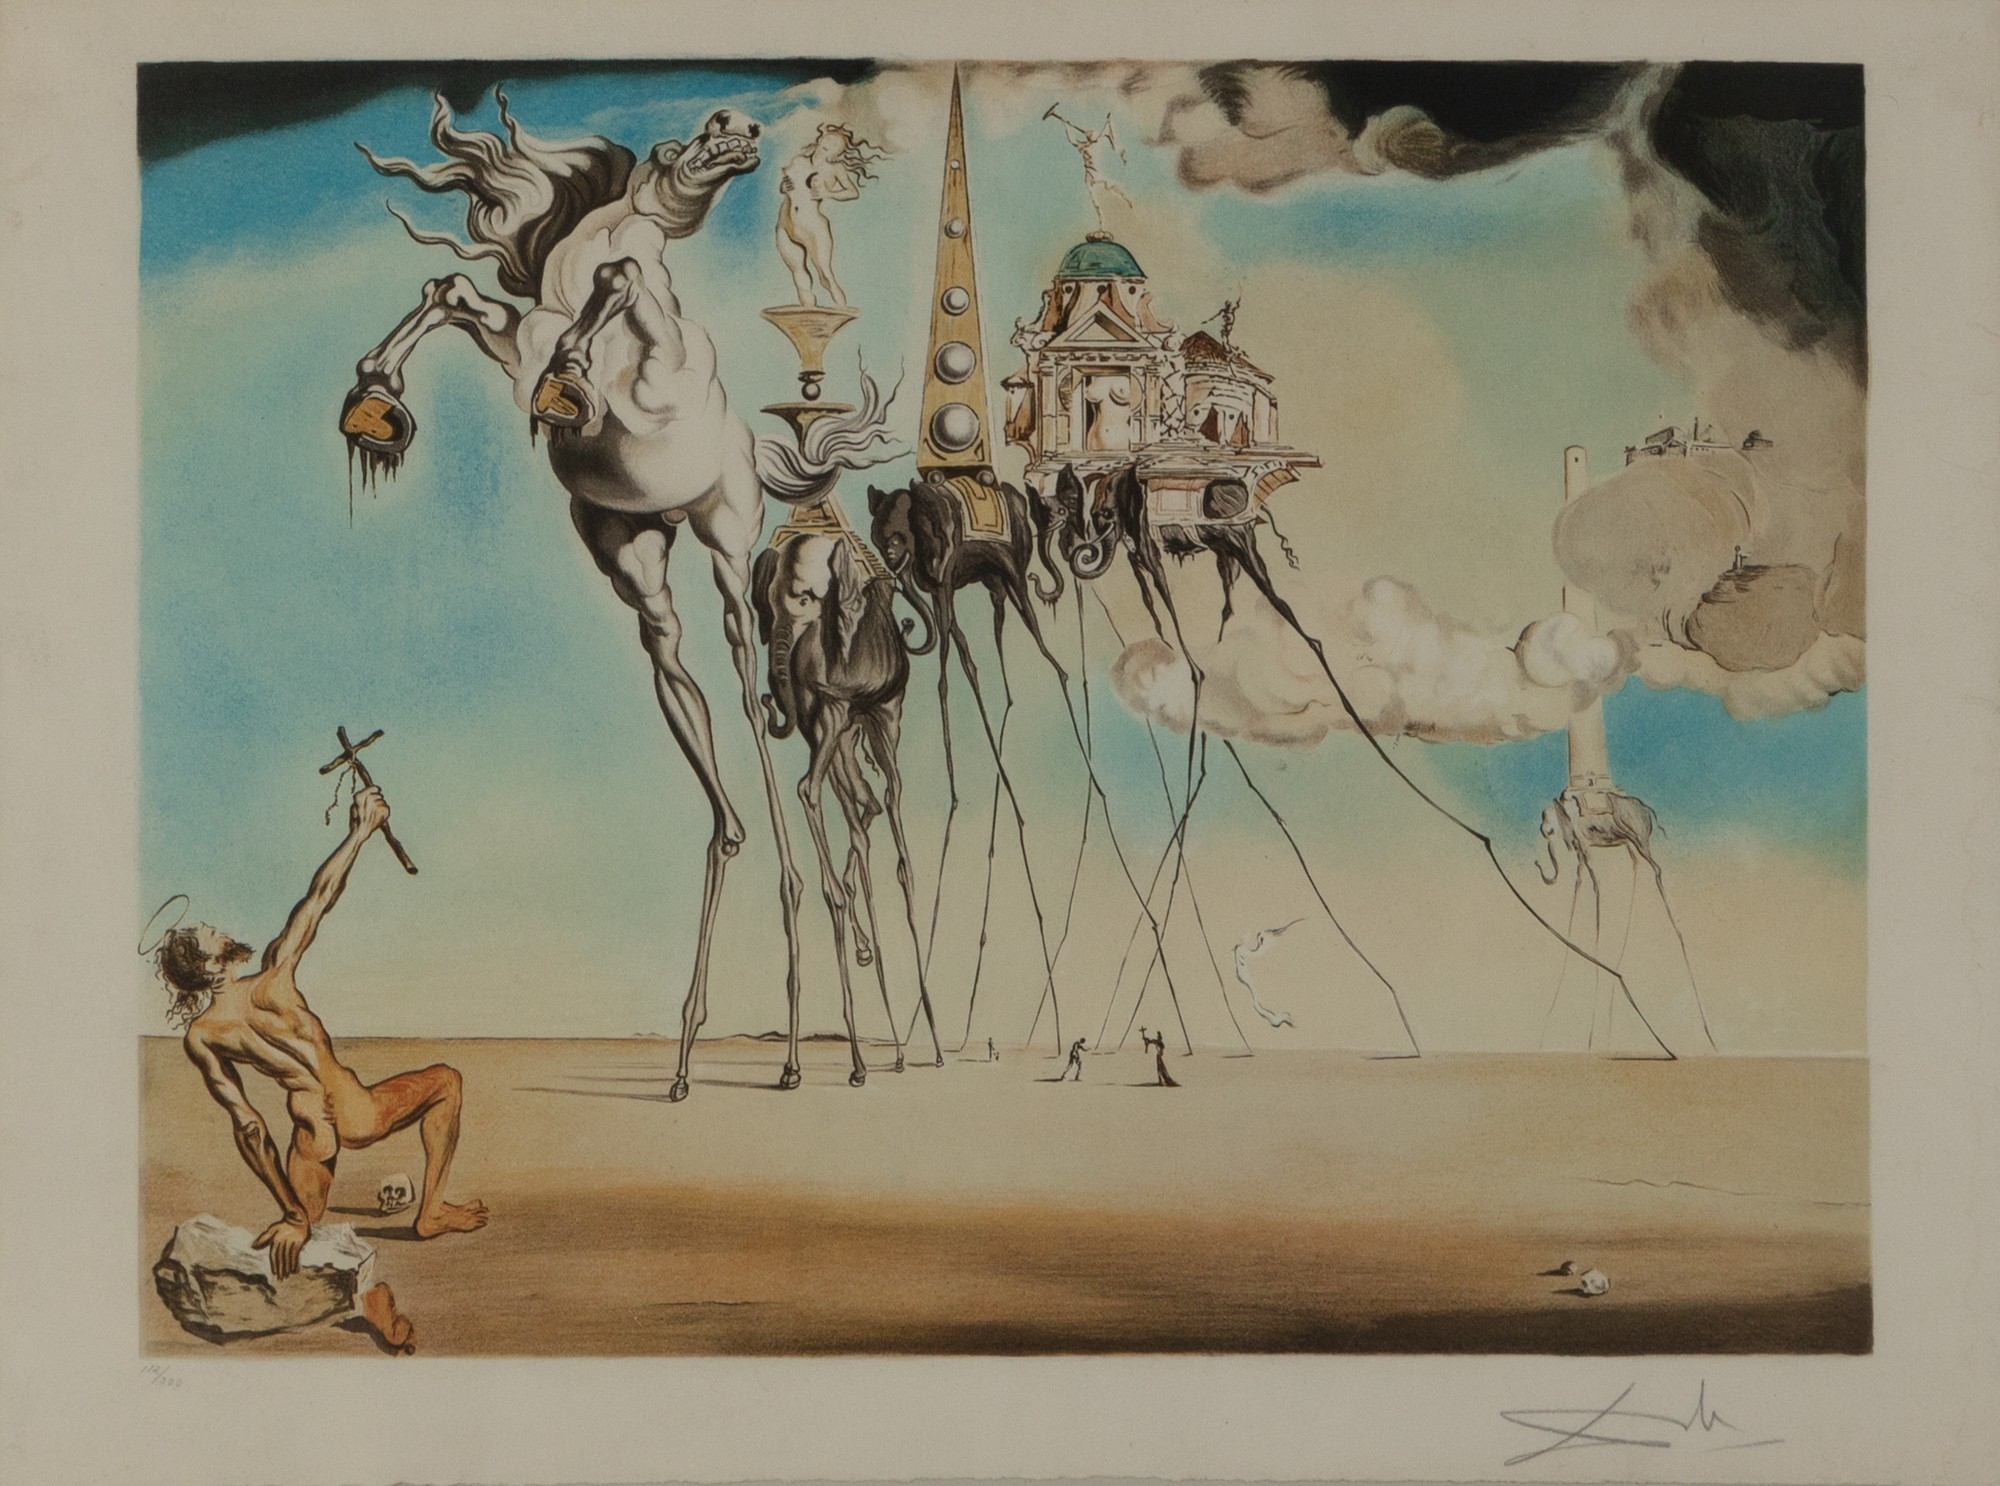 Untitled by Salvador Dalí